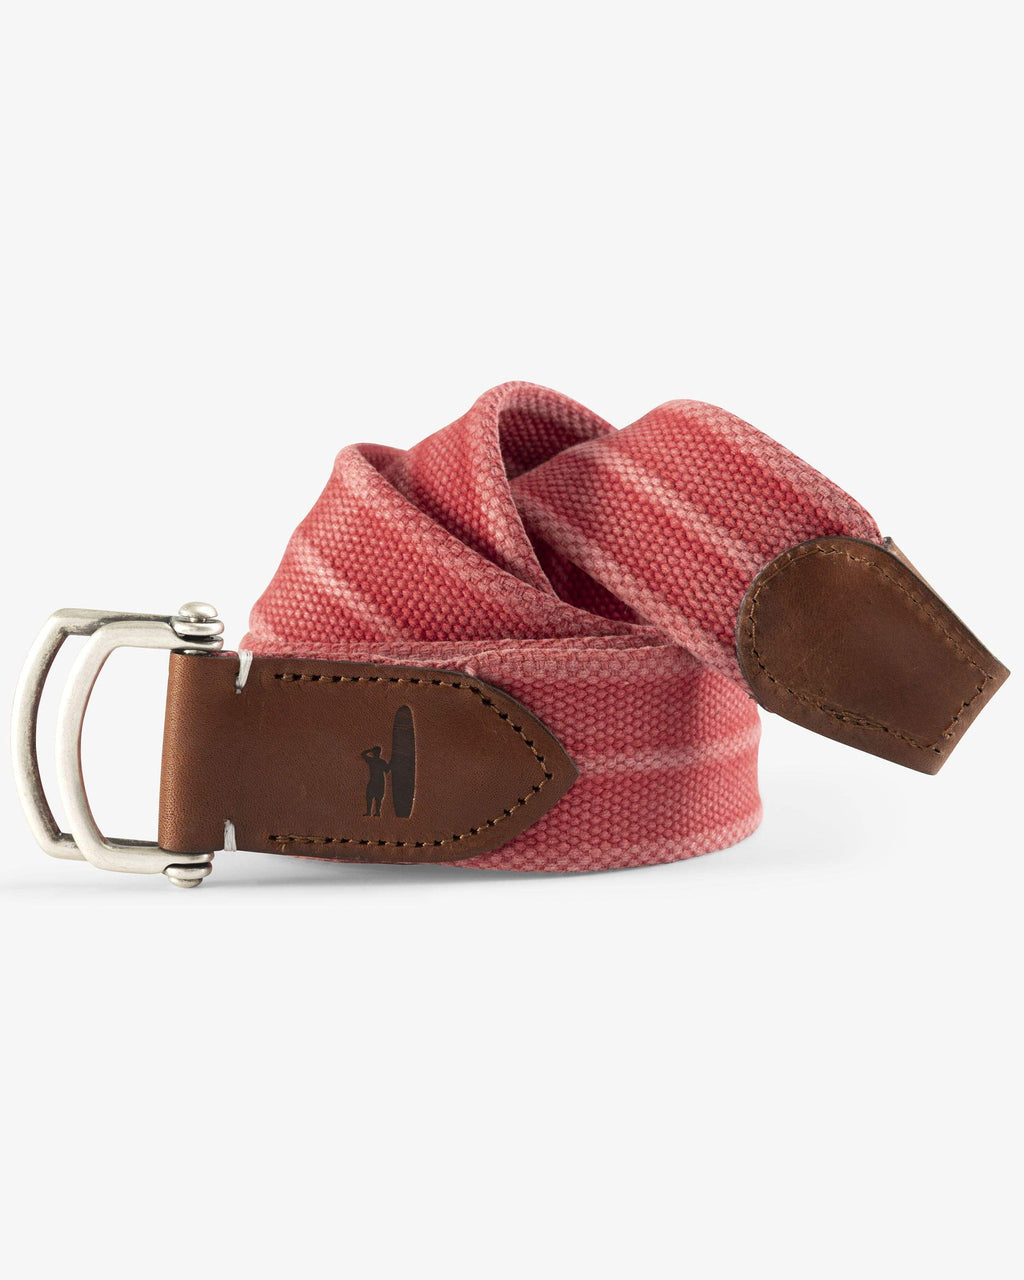 Men's Braided Leather Belt, Men's Accessories